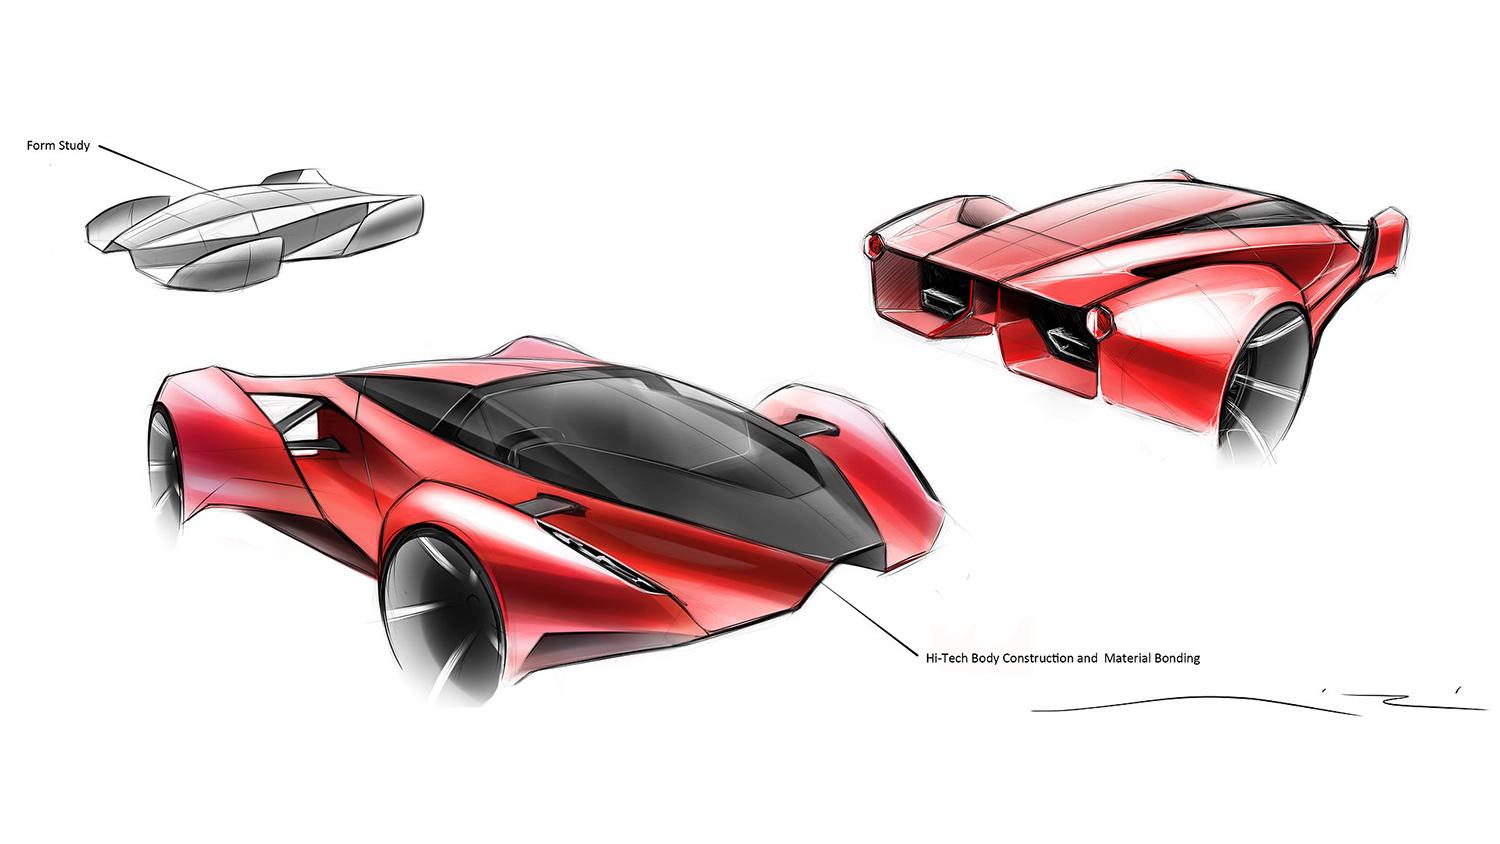 adriano raelis ferrari f80 rendering looks like future generation enzo concept 009